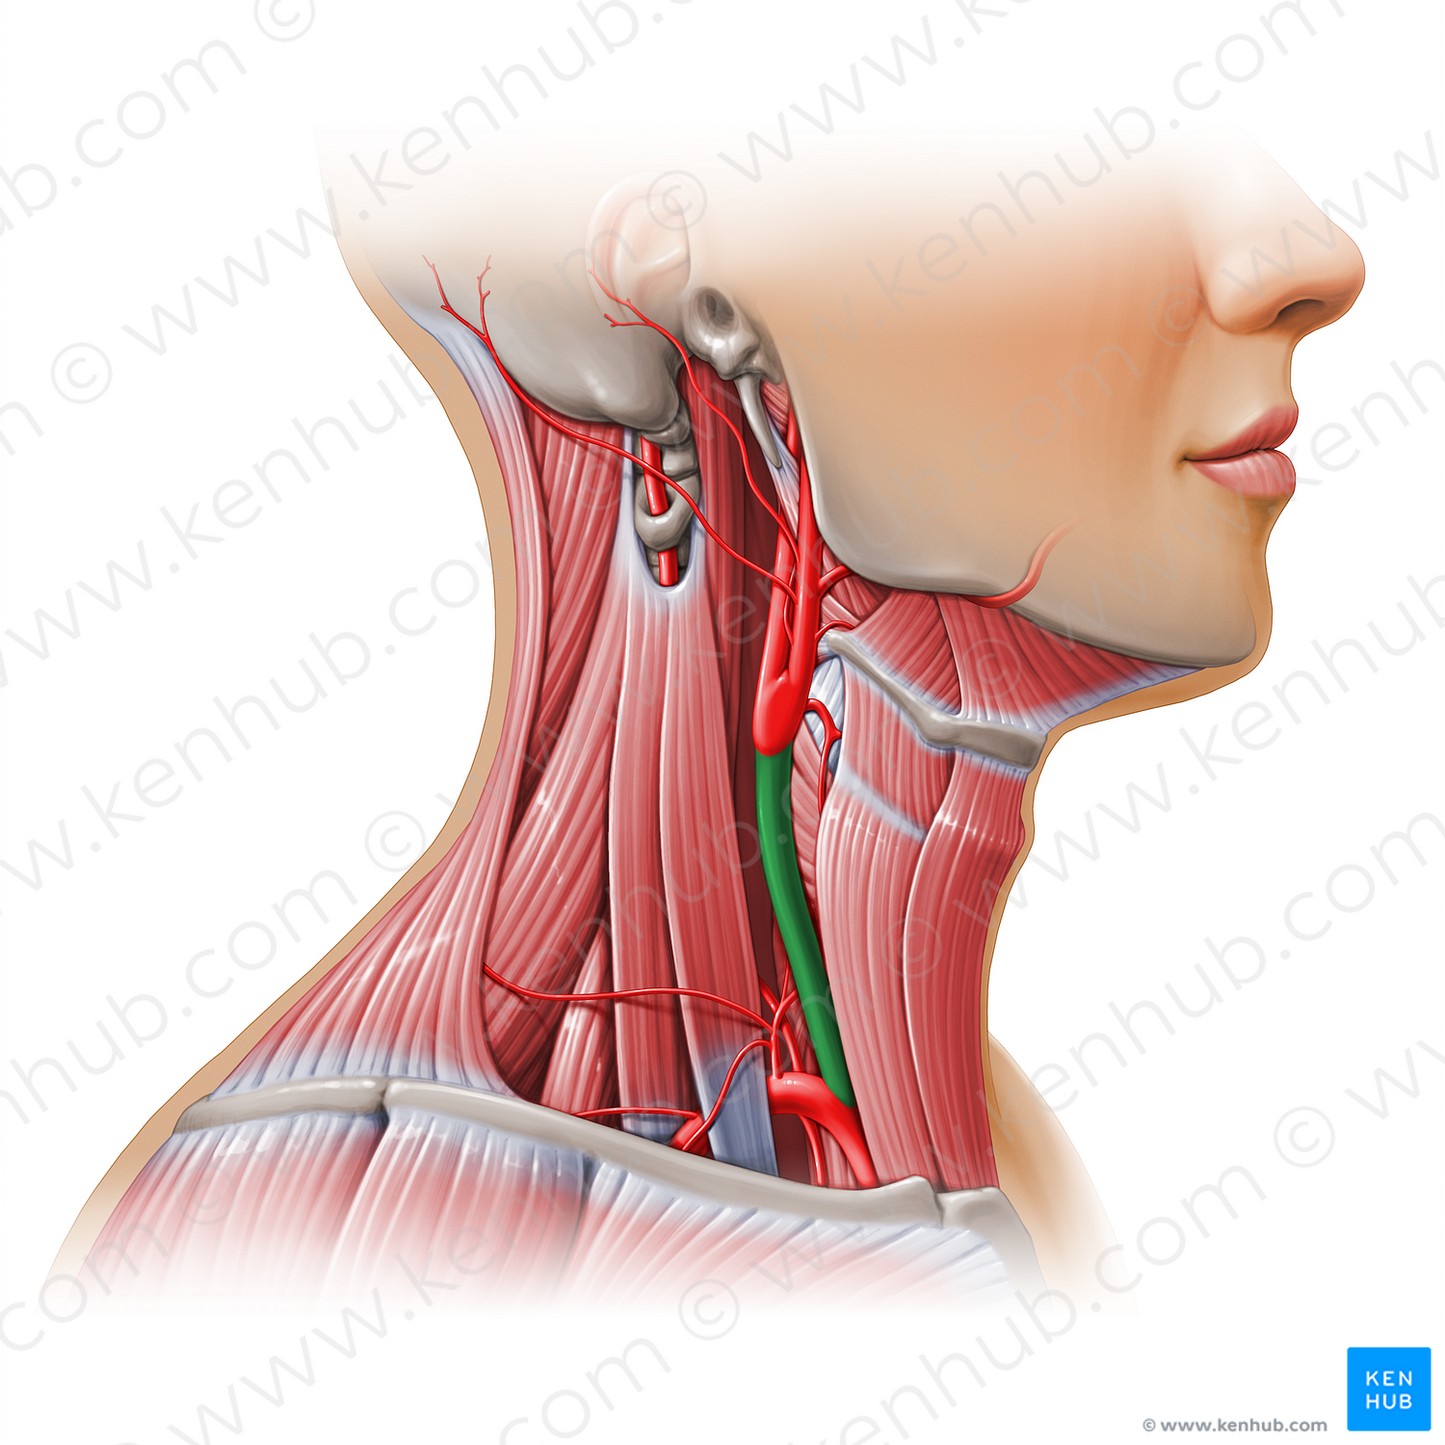 Common carotid artery (#11126)